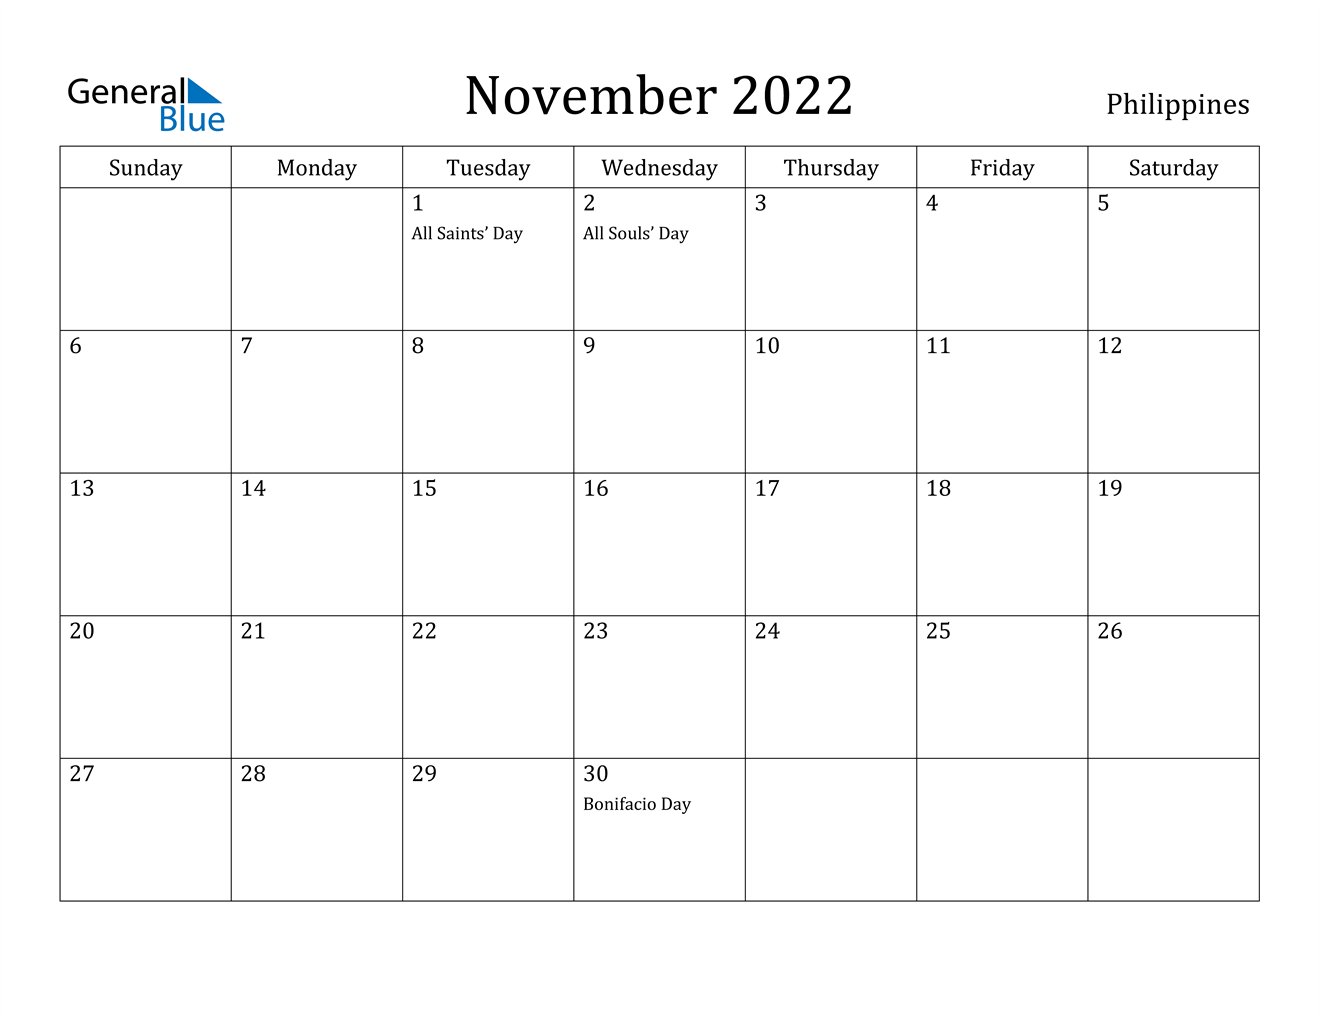 November 2022 Calendar - Philippines